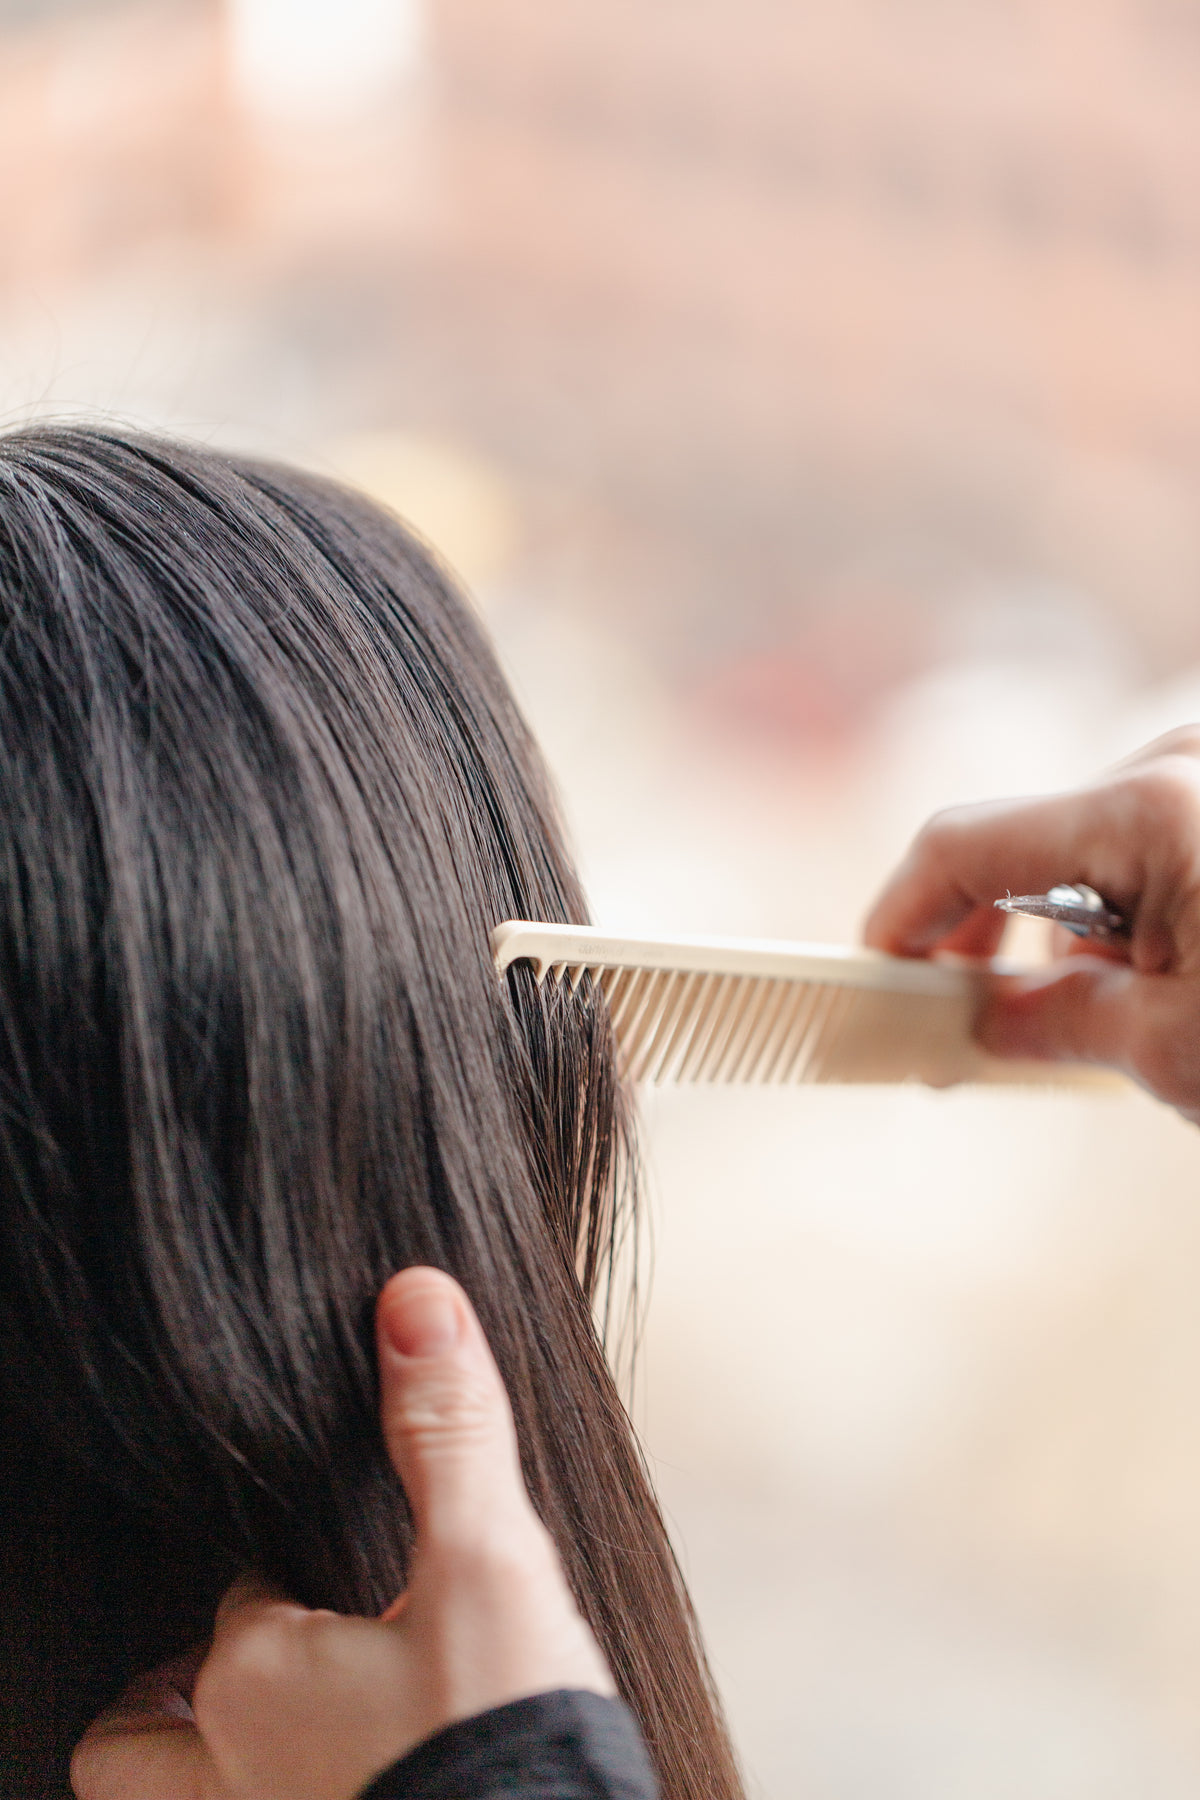 stylist combing through hair